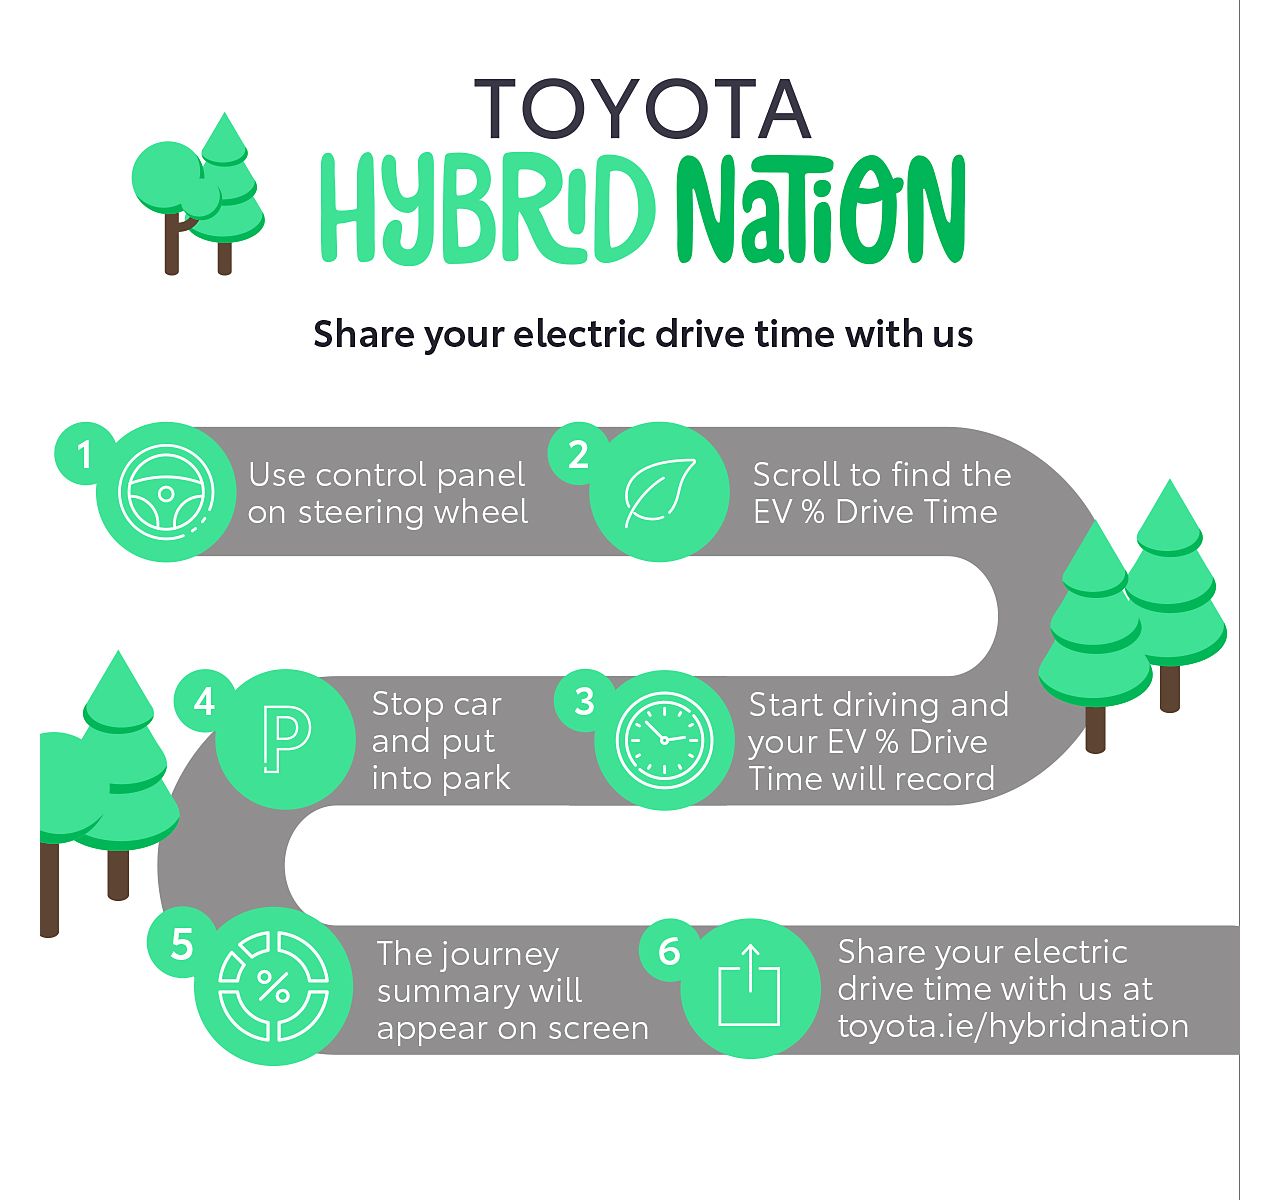 Hybrid Nation, Learn more